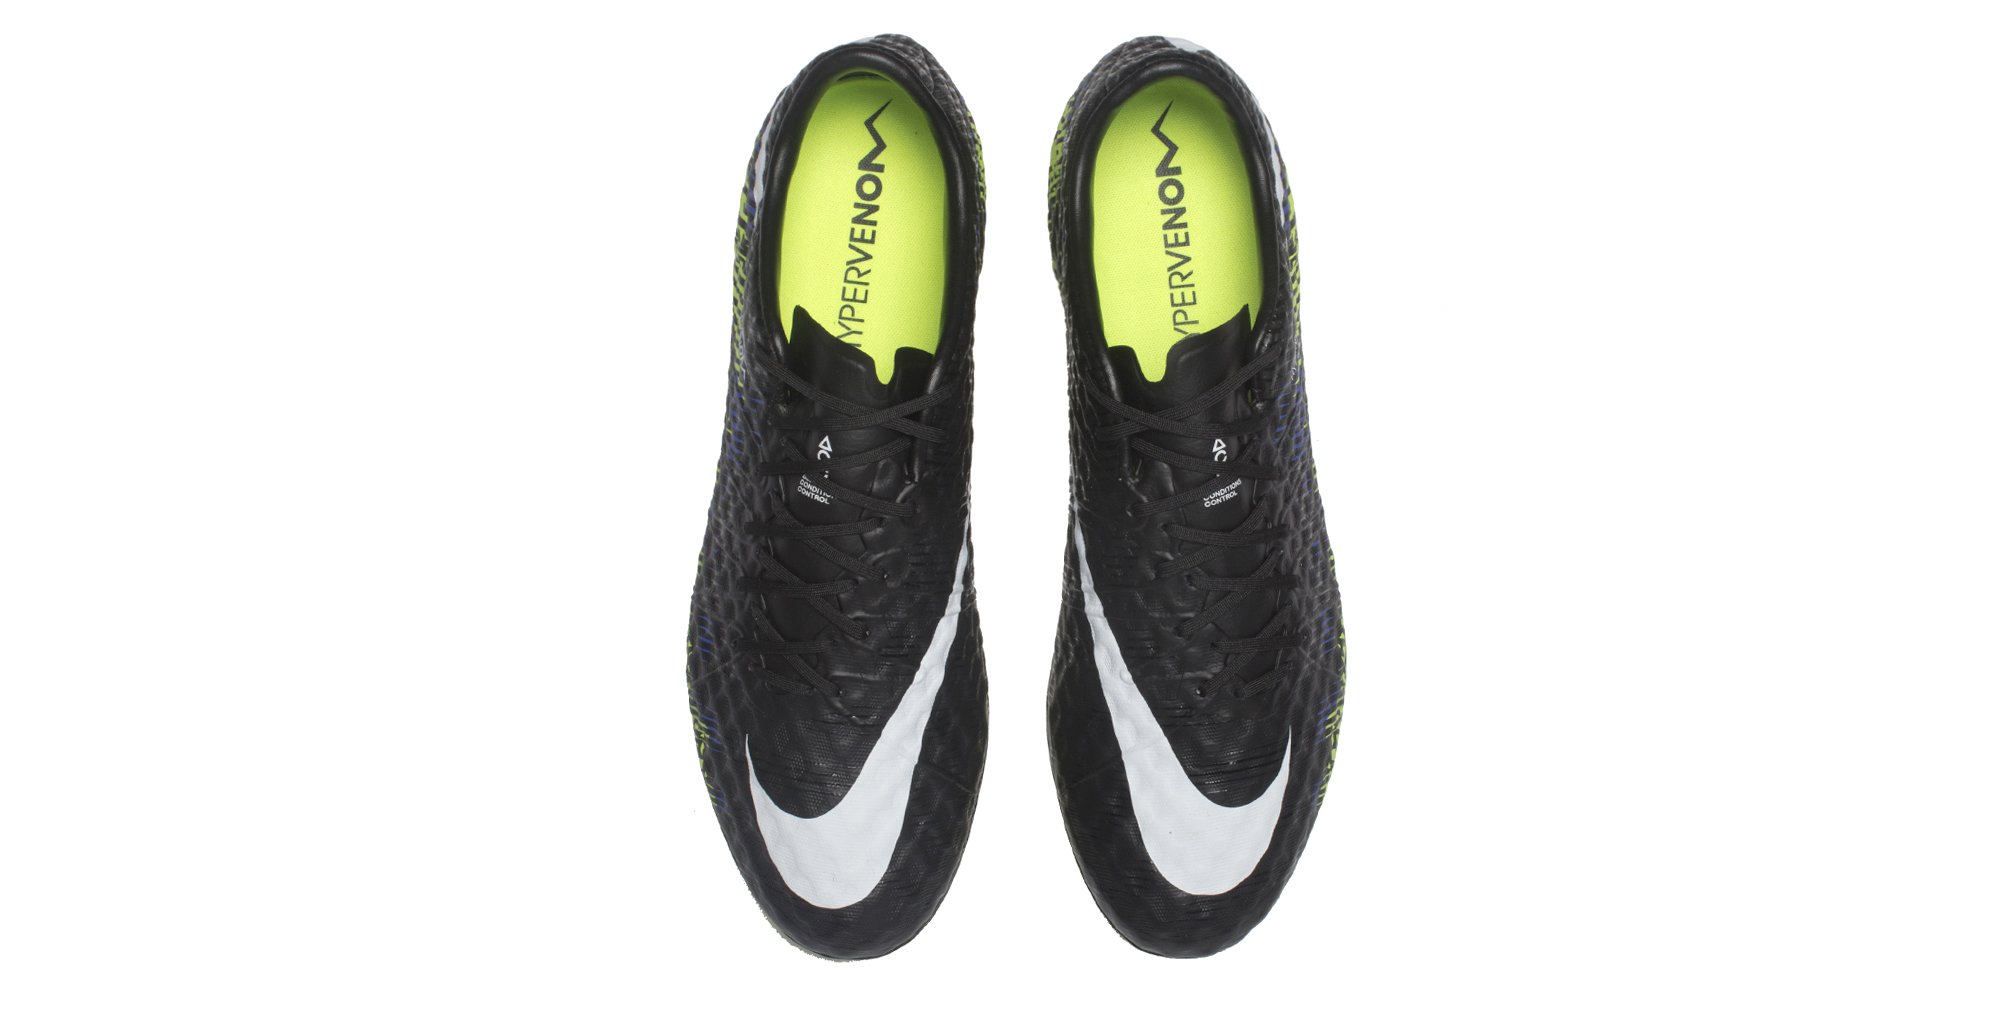 Nike Soccer Cleats Cheap Nike HypervenomX Proximo II DF